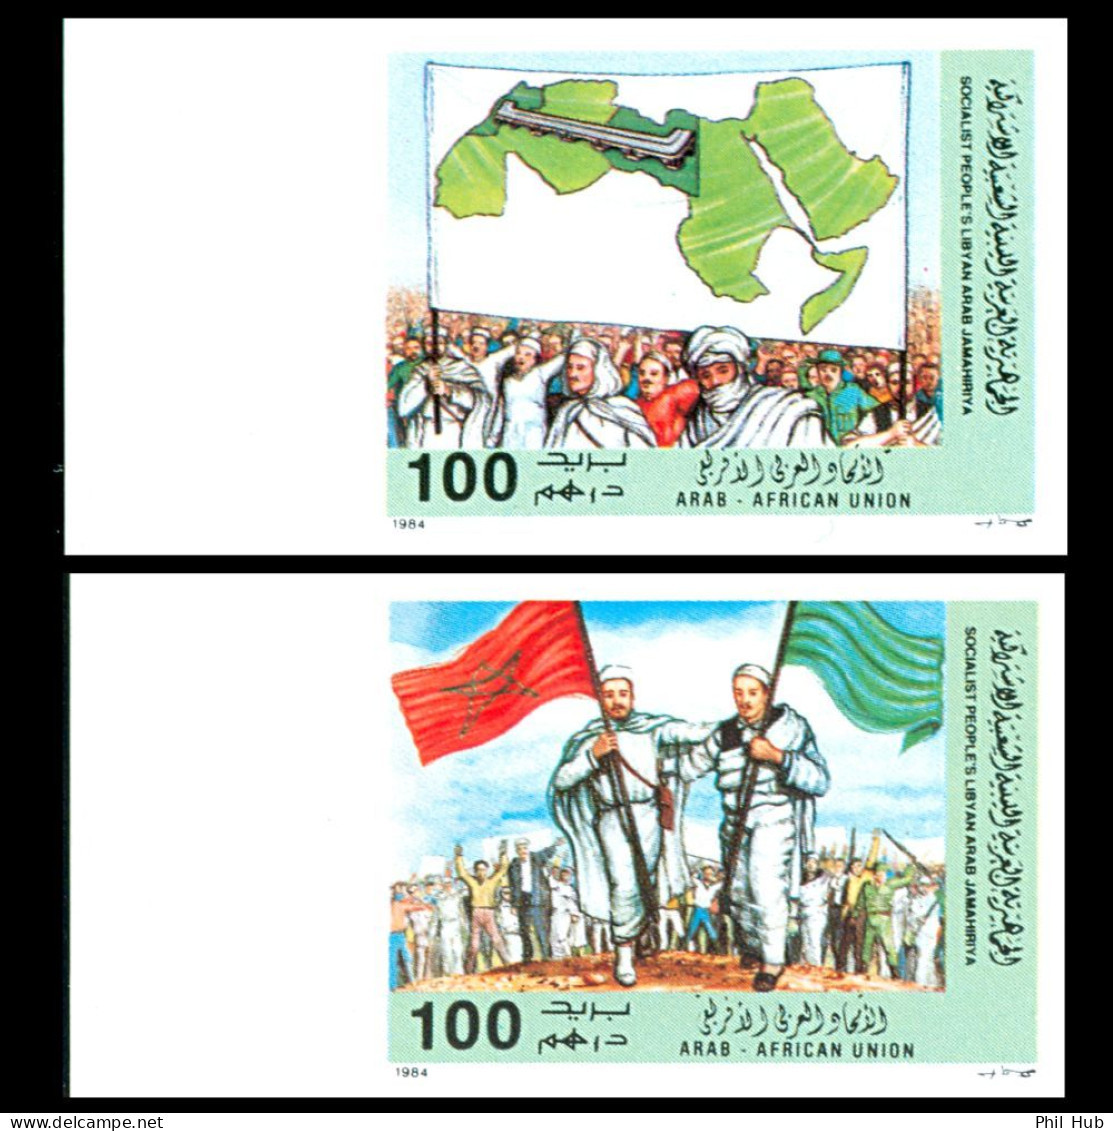 LIBYA 1984 IMPERFORATED Arab African Union Morocco Flags BORDER (MNH) - Libya